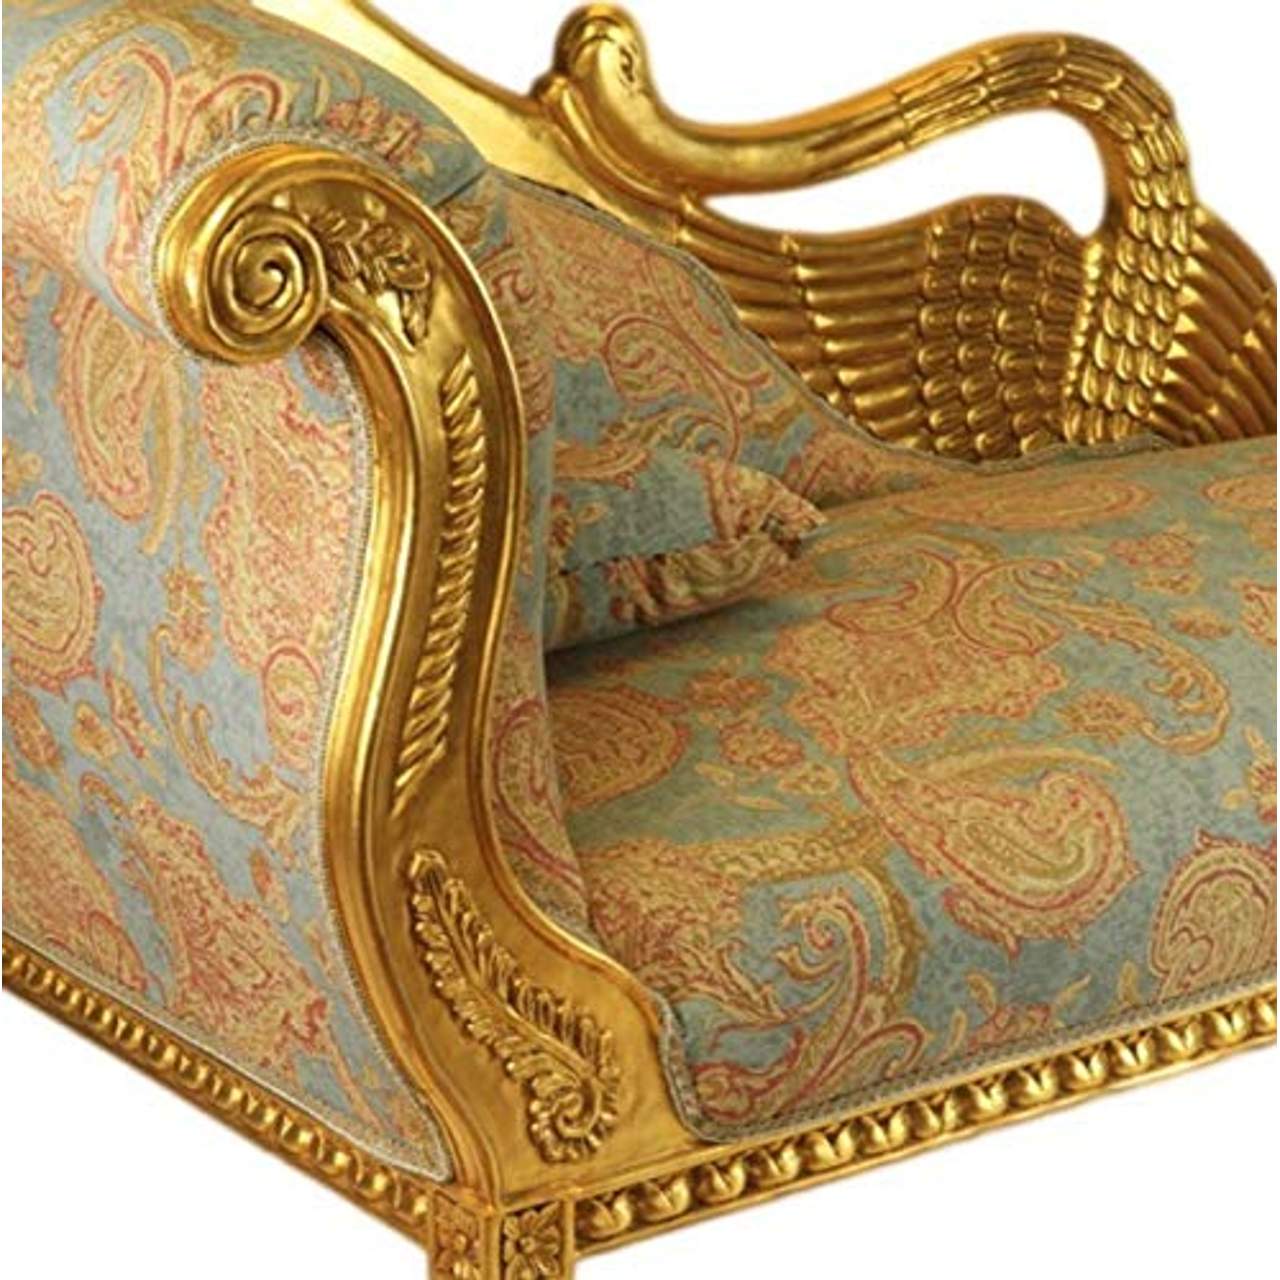 Casa Padrino Barock Chaiselongue Antik Gold-Türkis-Rot Muster